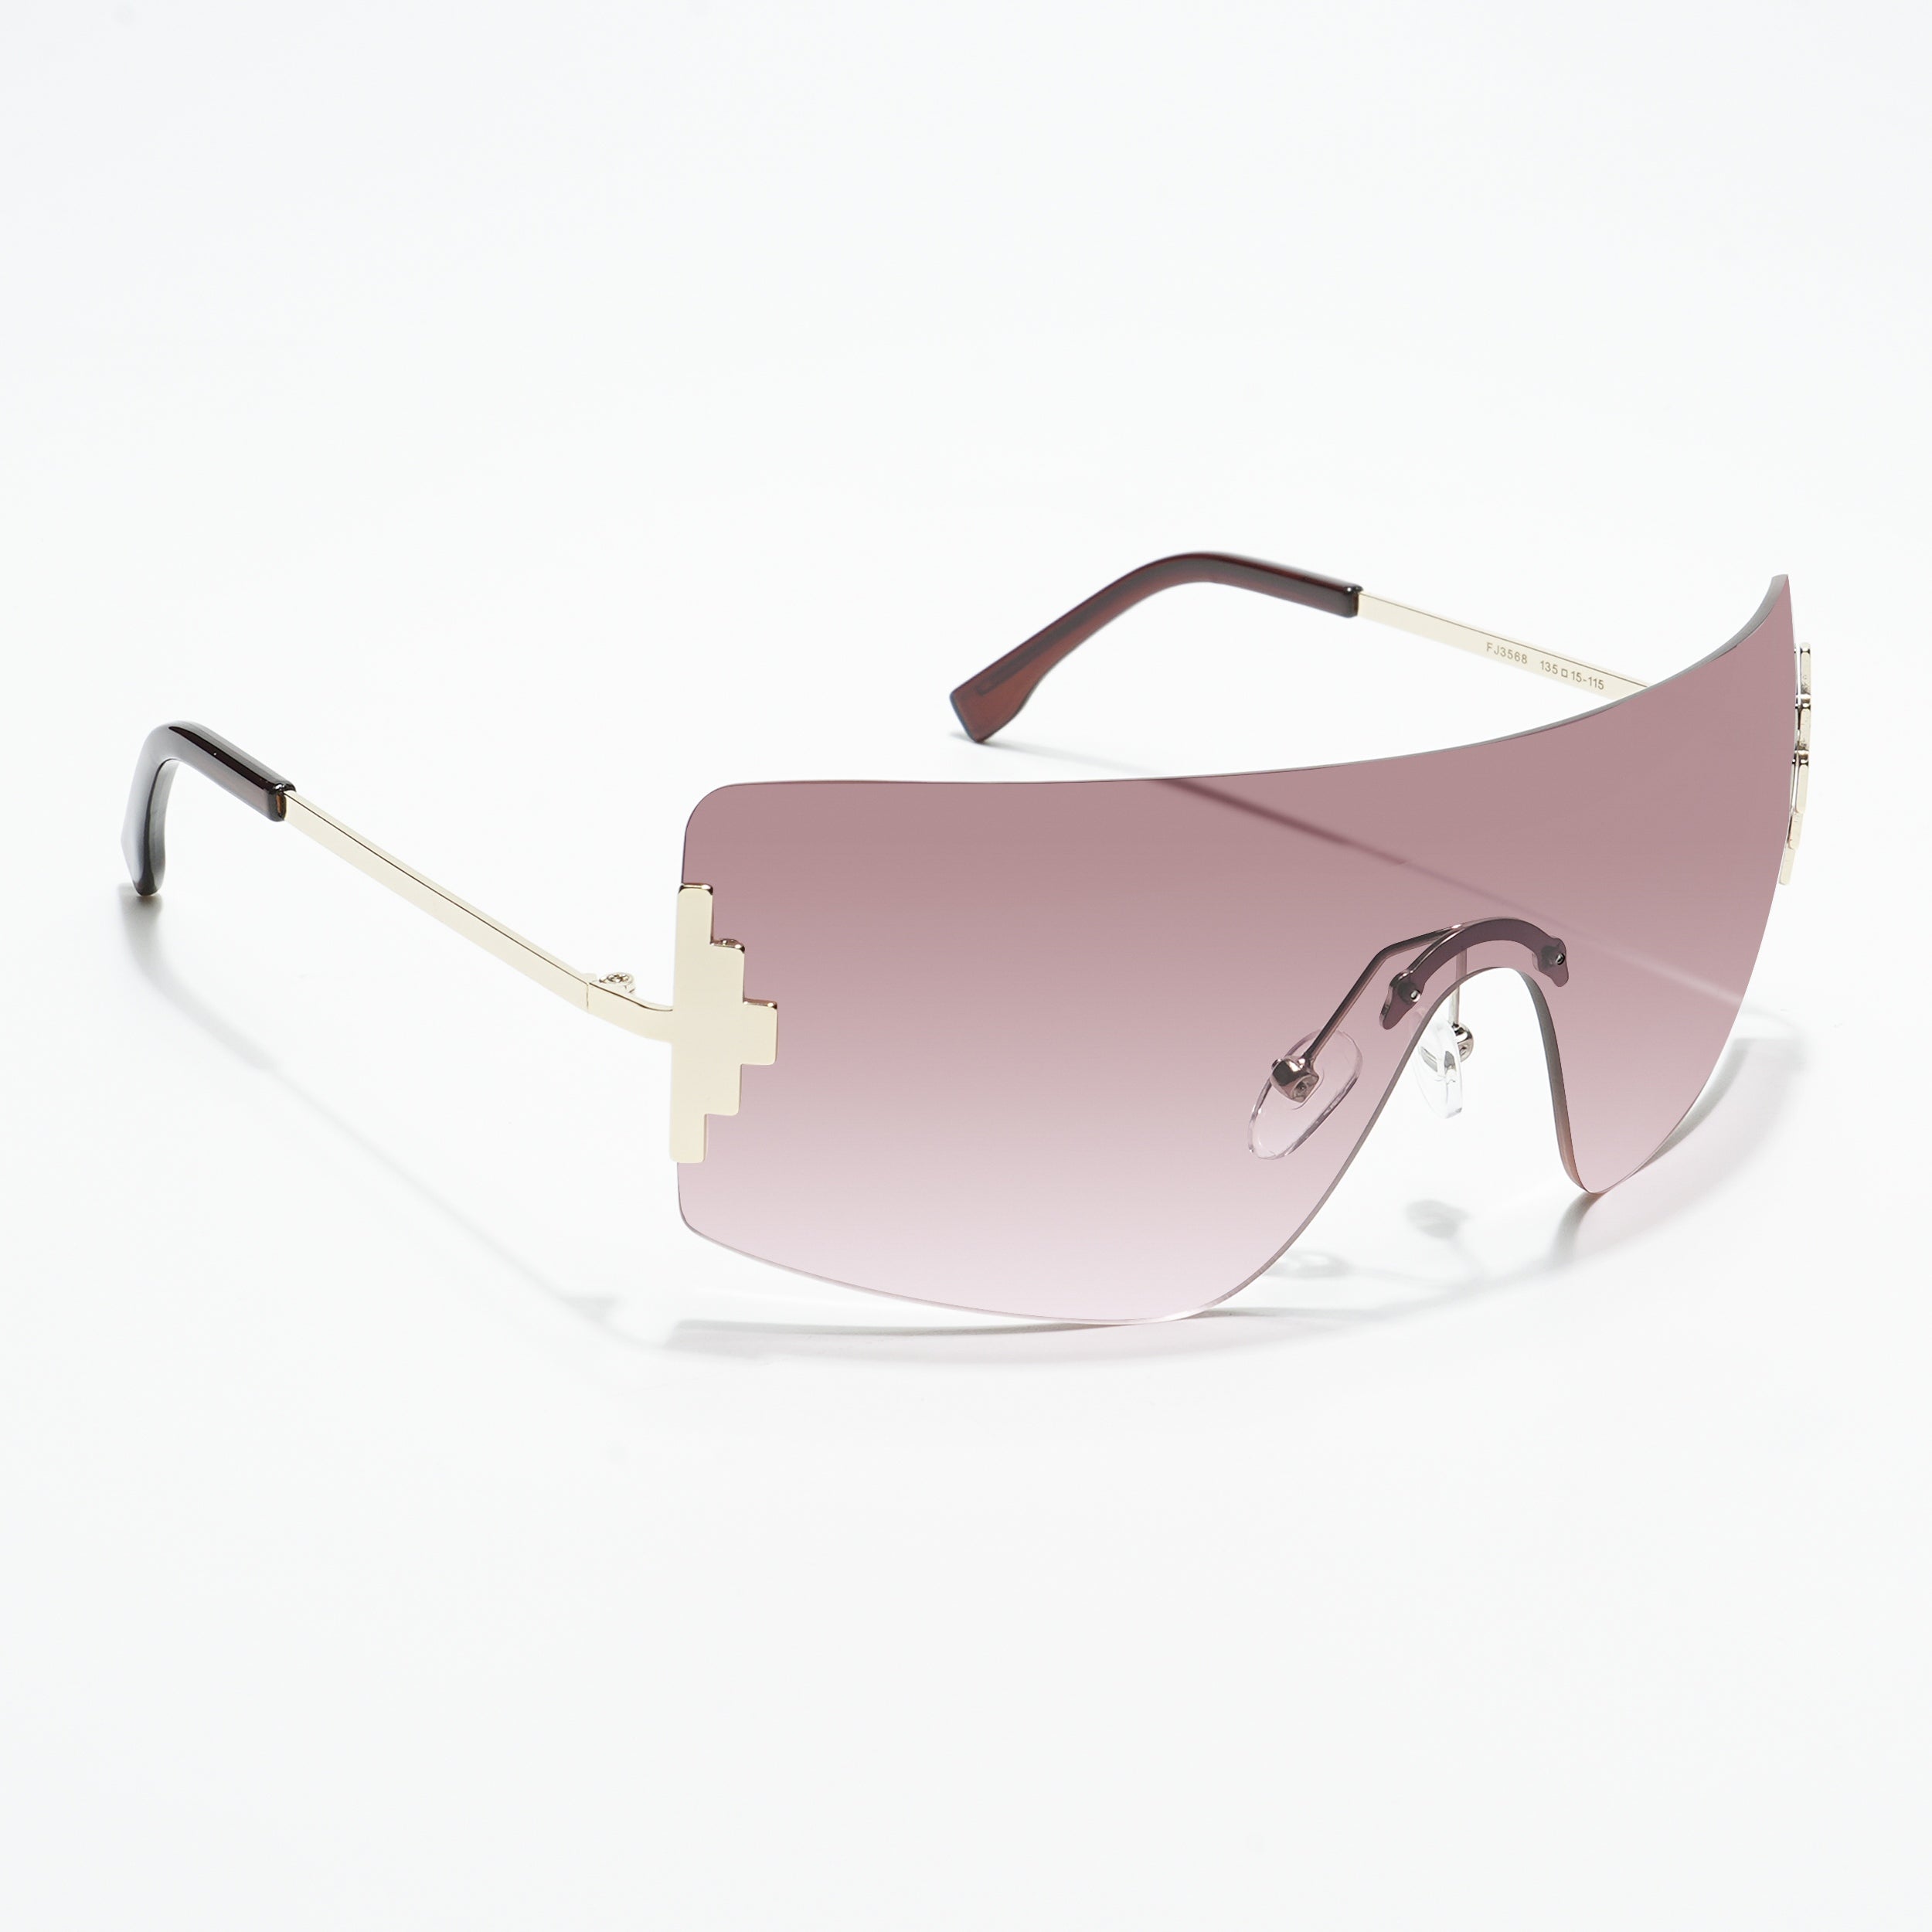 Voyage Brown Wrap Around Sunglasses for Men & Women - MG4120